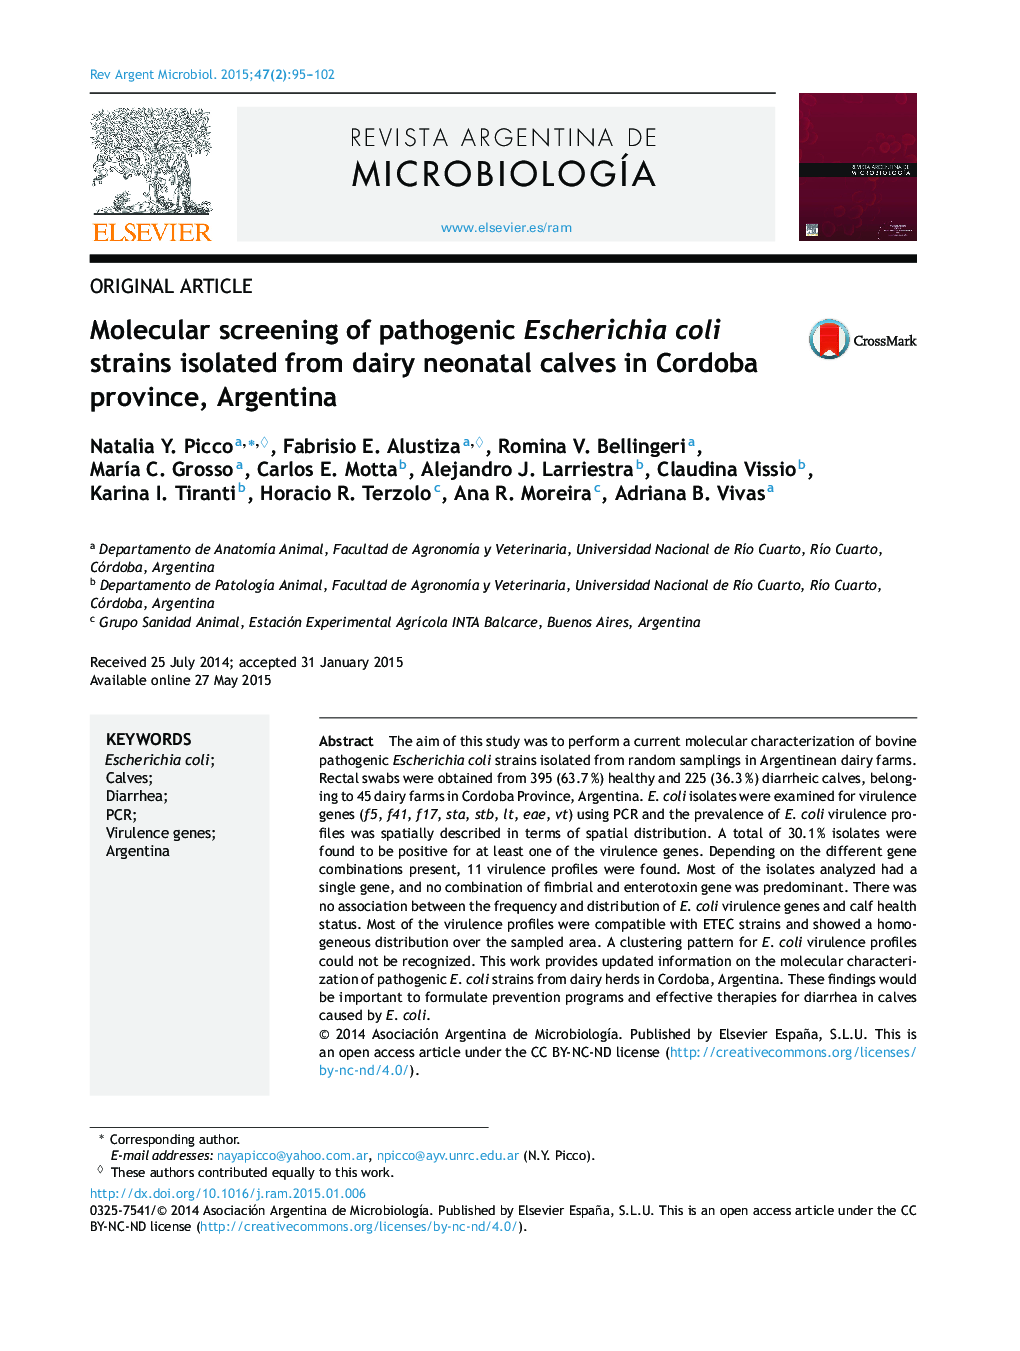 Molecular screening of pathogenic Escherichia coli strains isolated from dairy neonatal calves in Cordoba province, Argentina